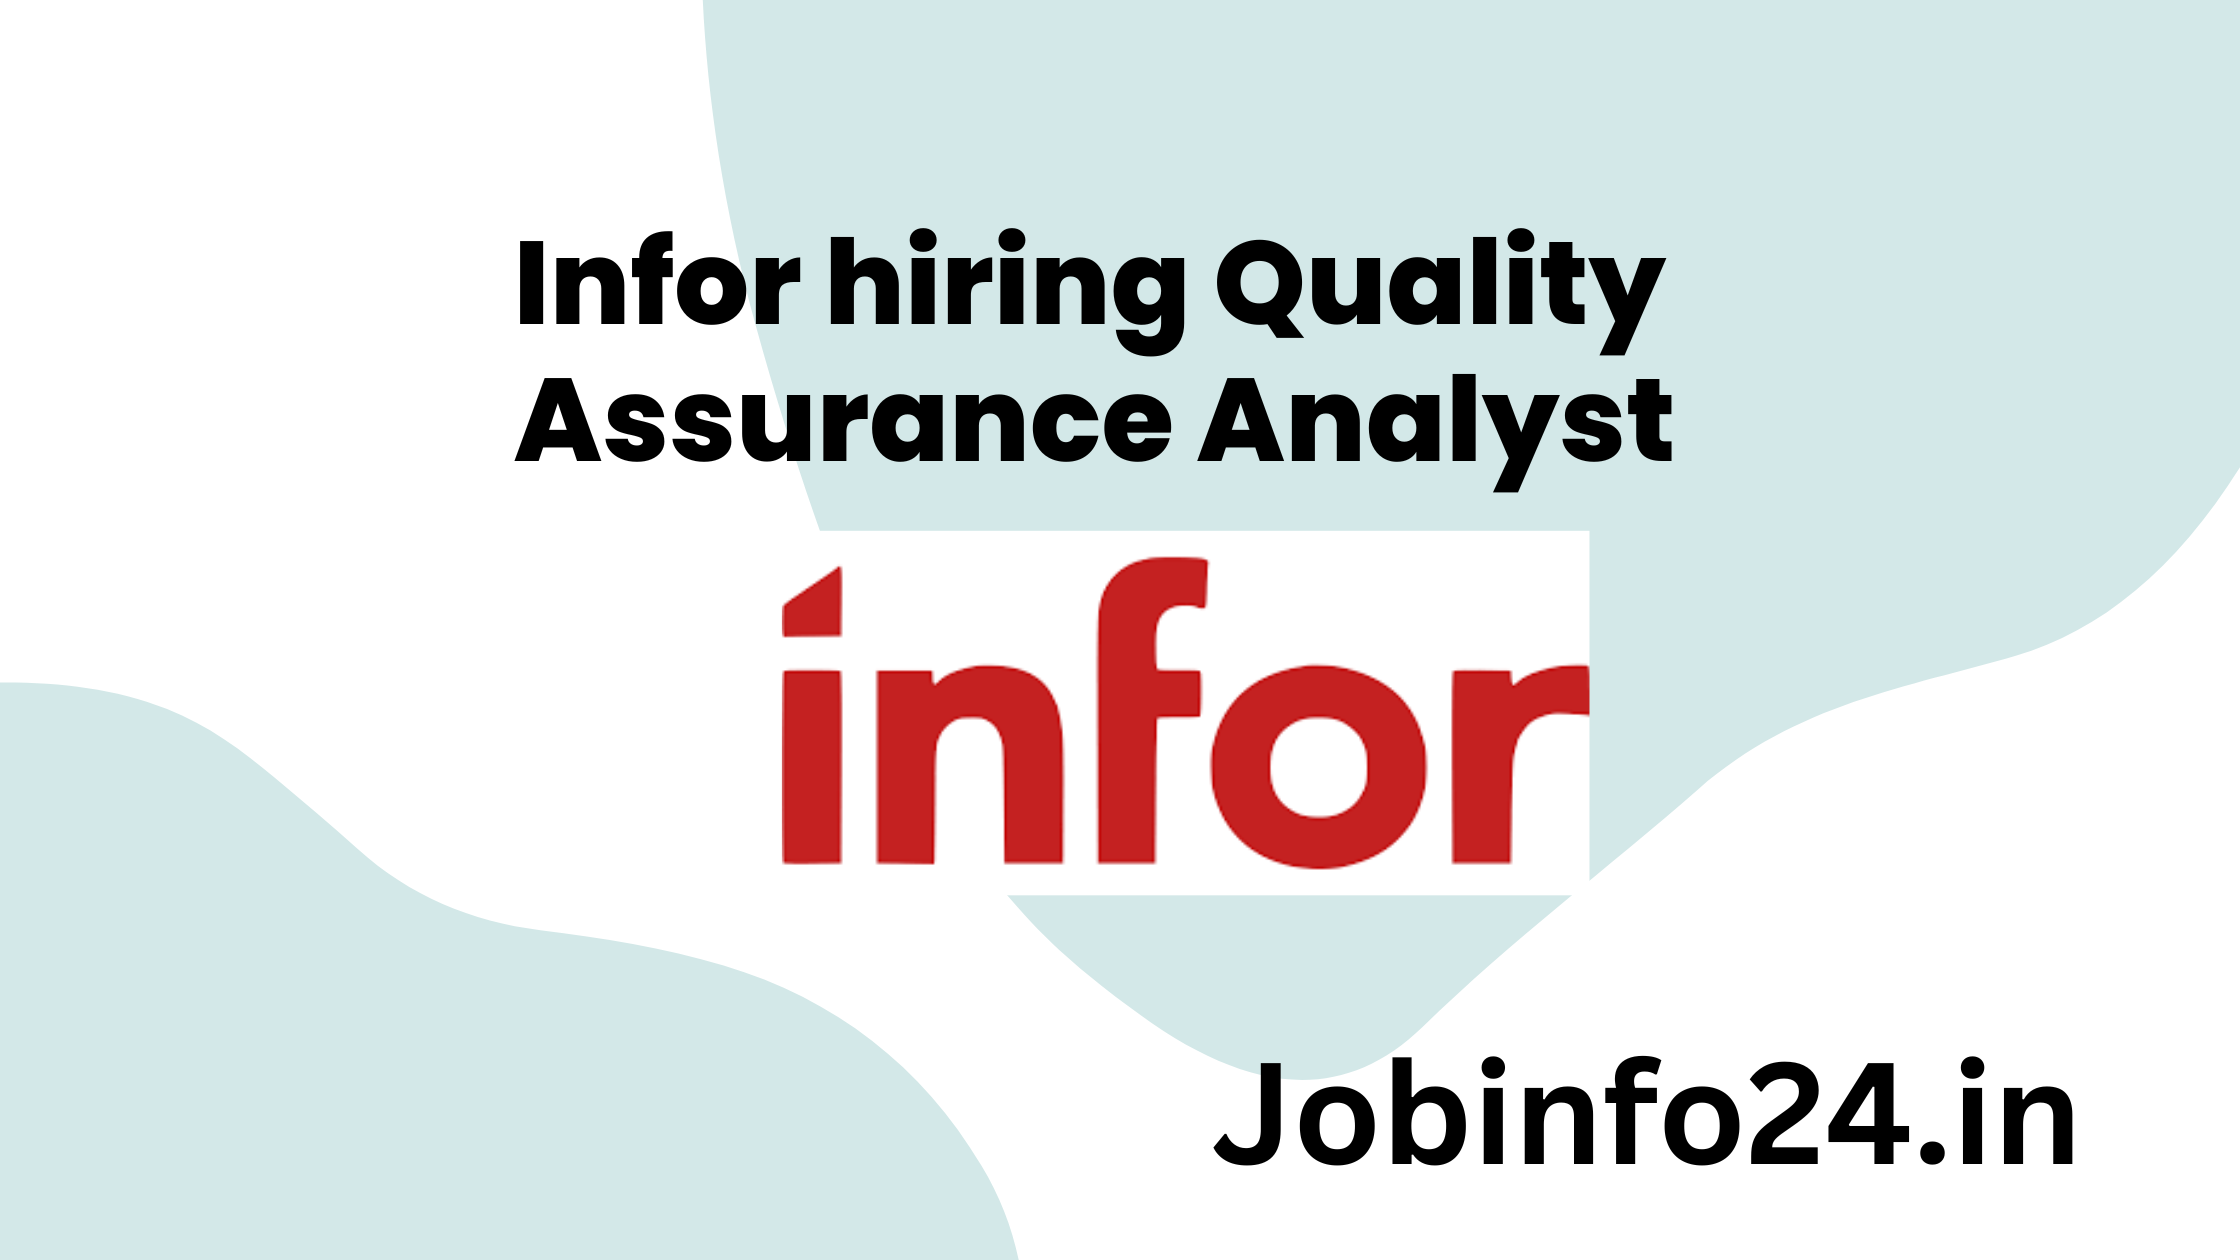 Infor hiring Quality Assurance Analyst